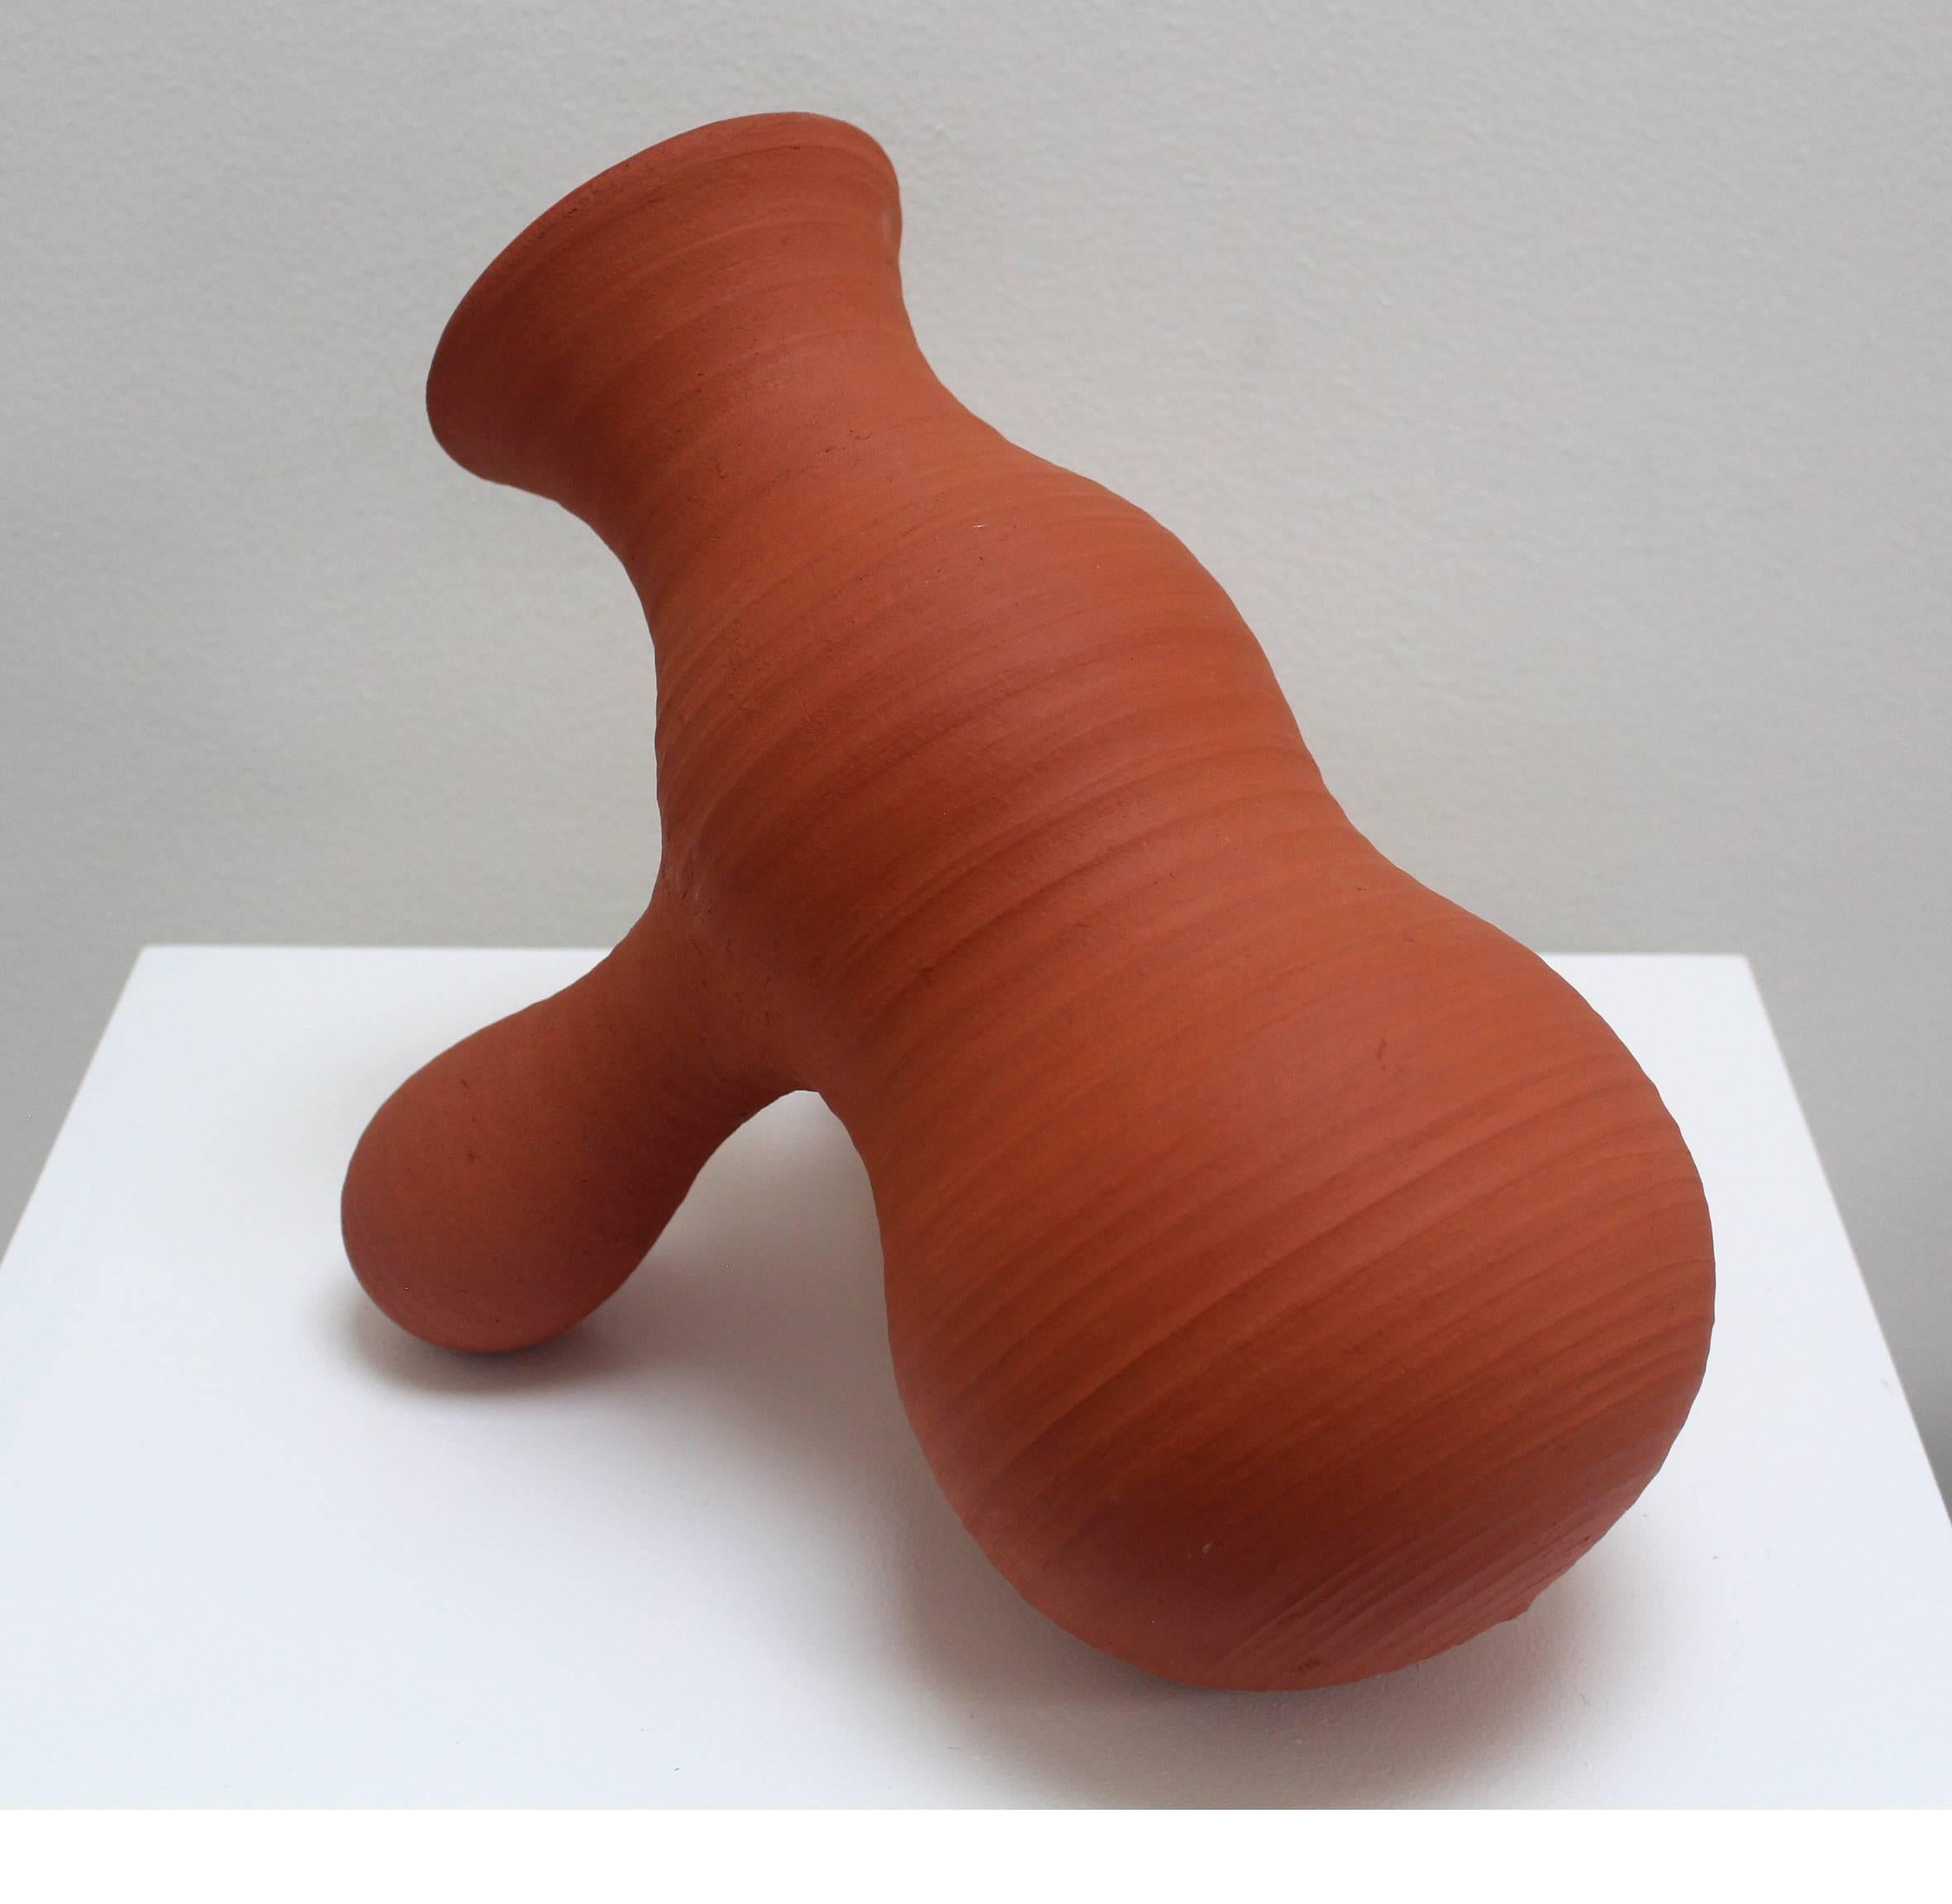 Scandinavian Modern Contemporary Handthrown Ceramic Sculptural Pot by Danish Designer Ole Jensen For Sale